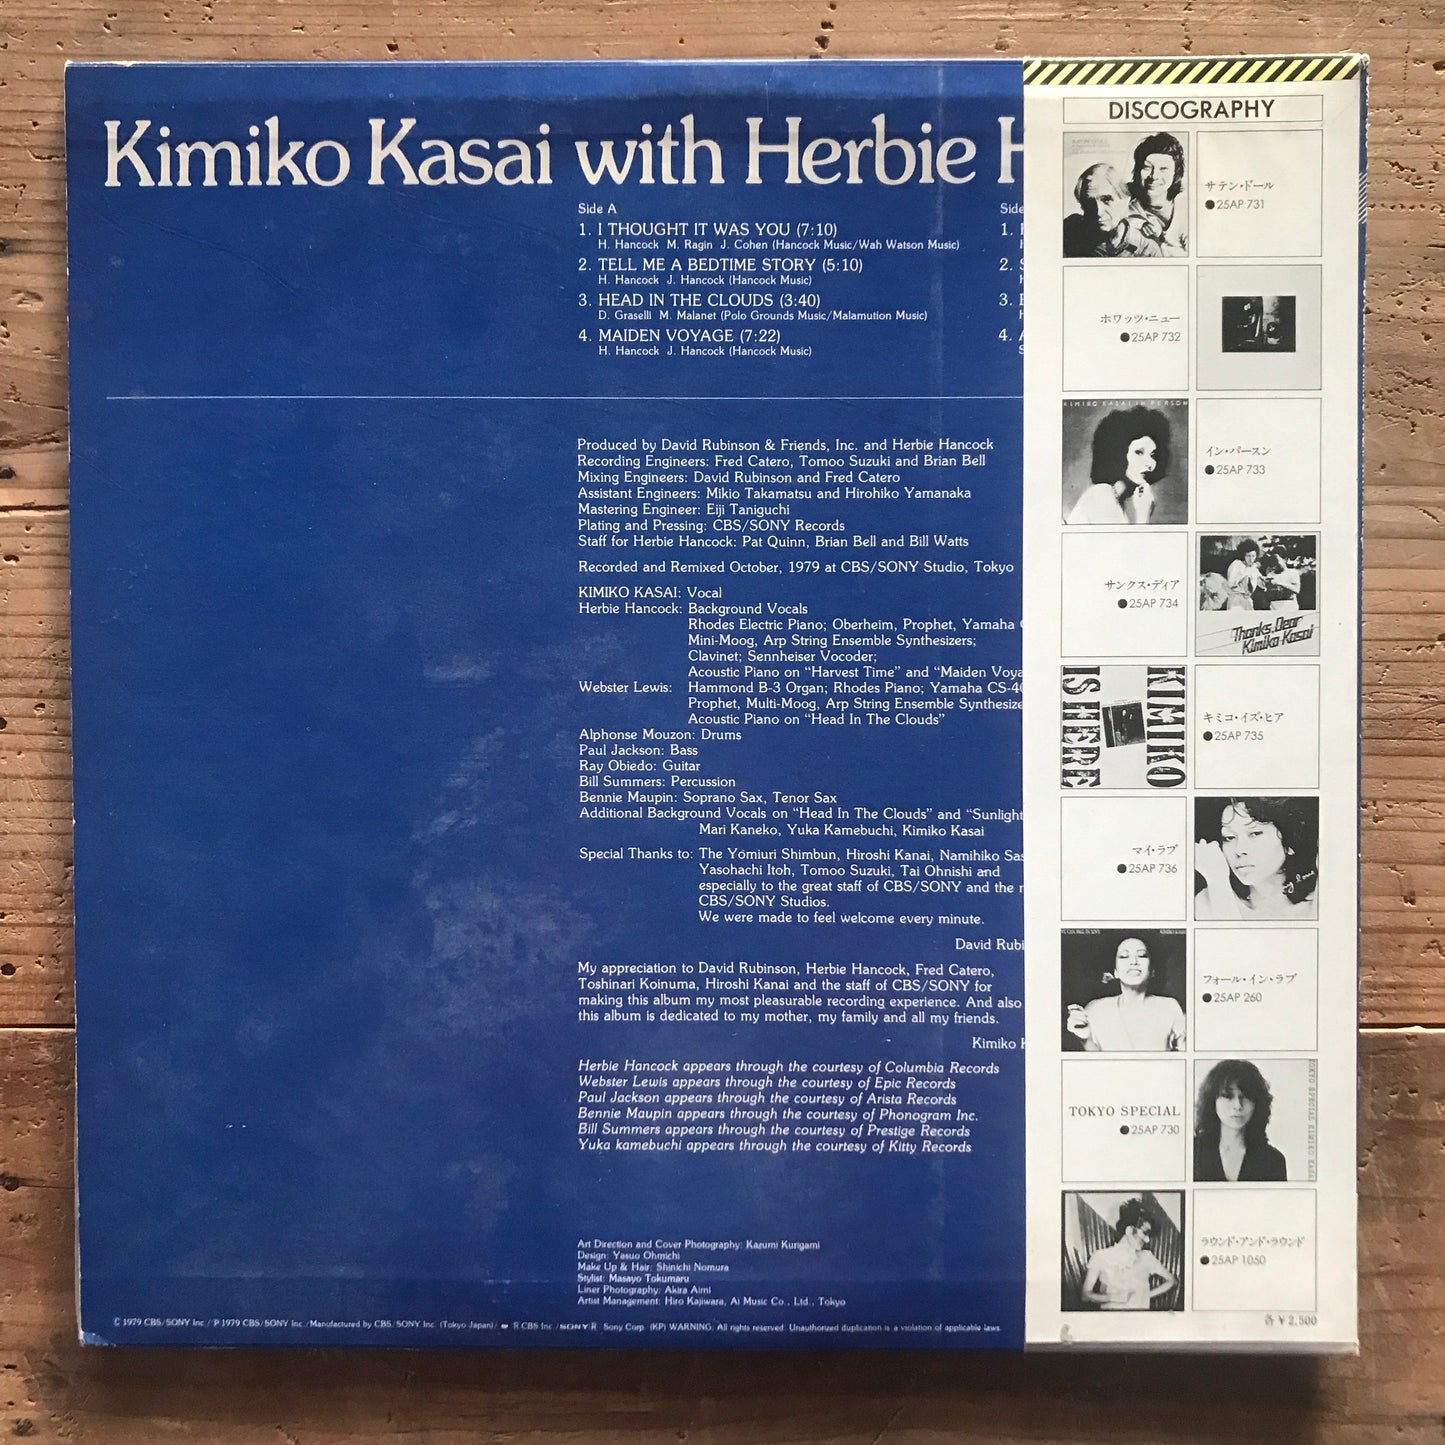 Kimiko Kasai with Herbie Hancock - Butterfly (Original)